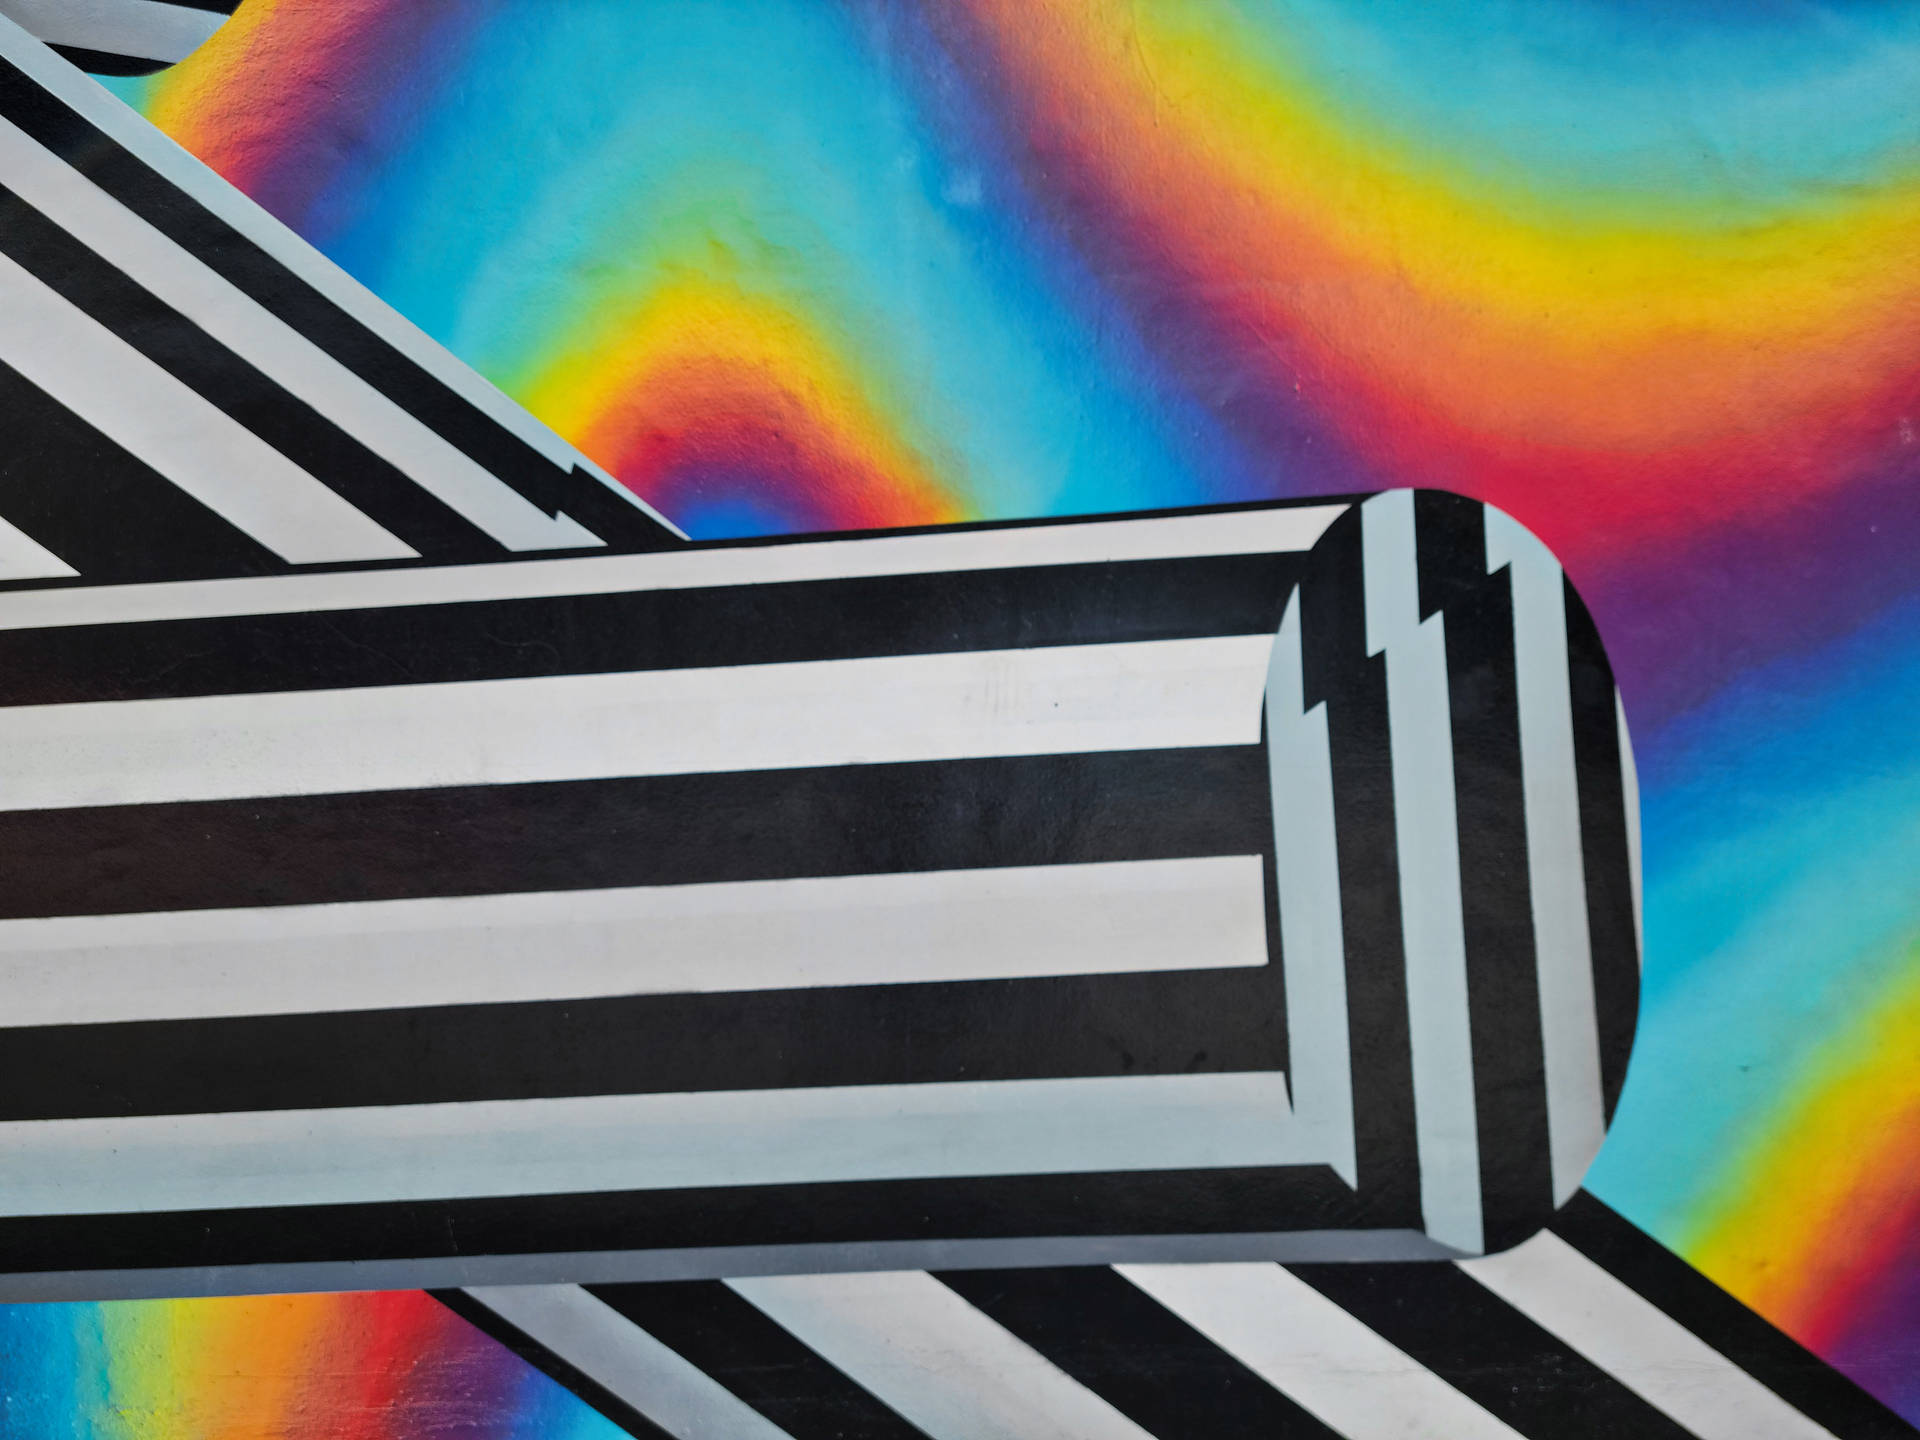 Caption: Artistic Rainbow Stripes Design Background